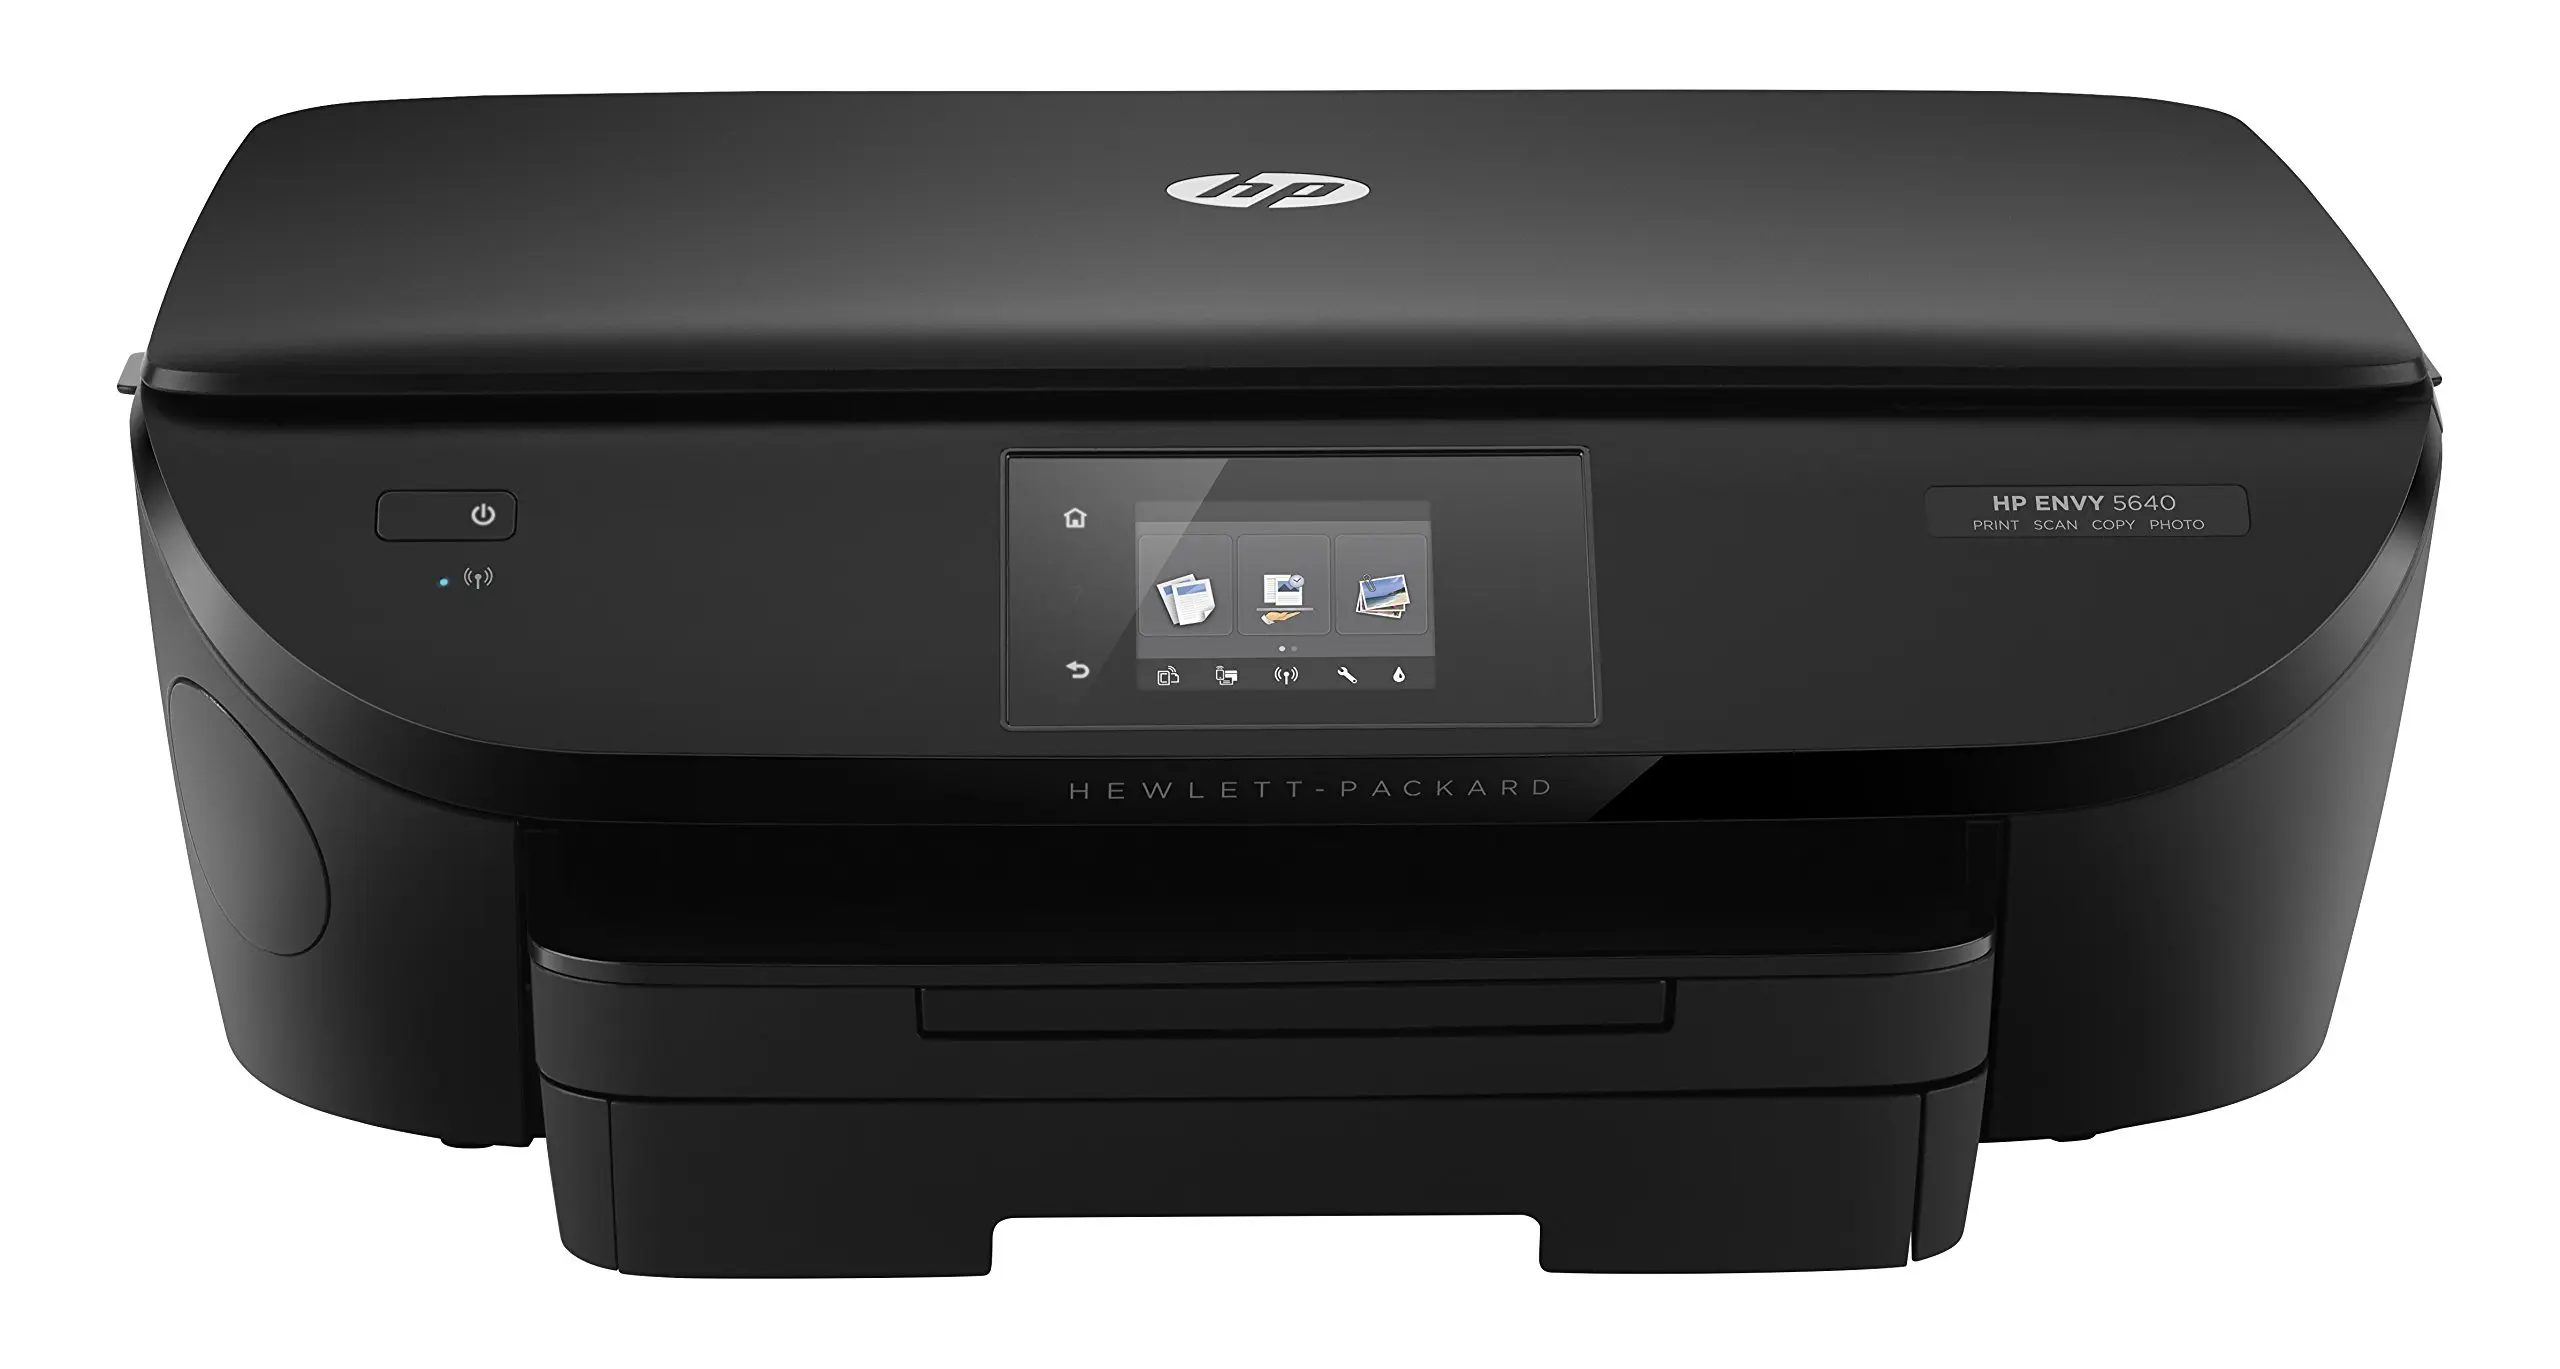 hewlett packard printer envy 5640 - How do I connect my HP ENVY 5640